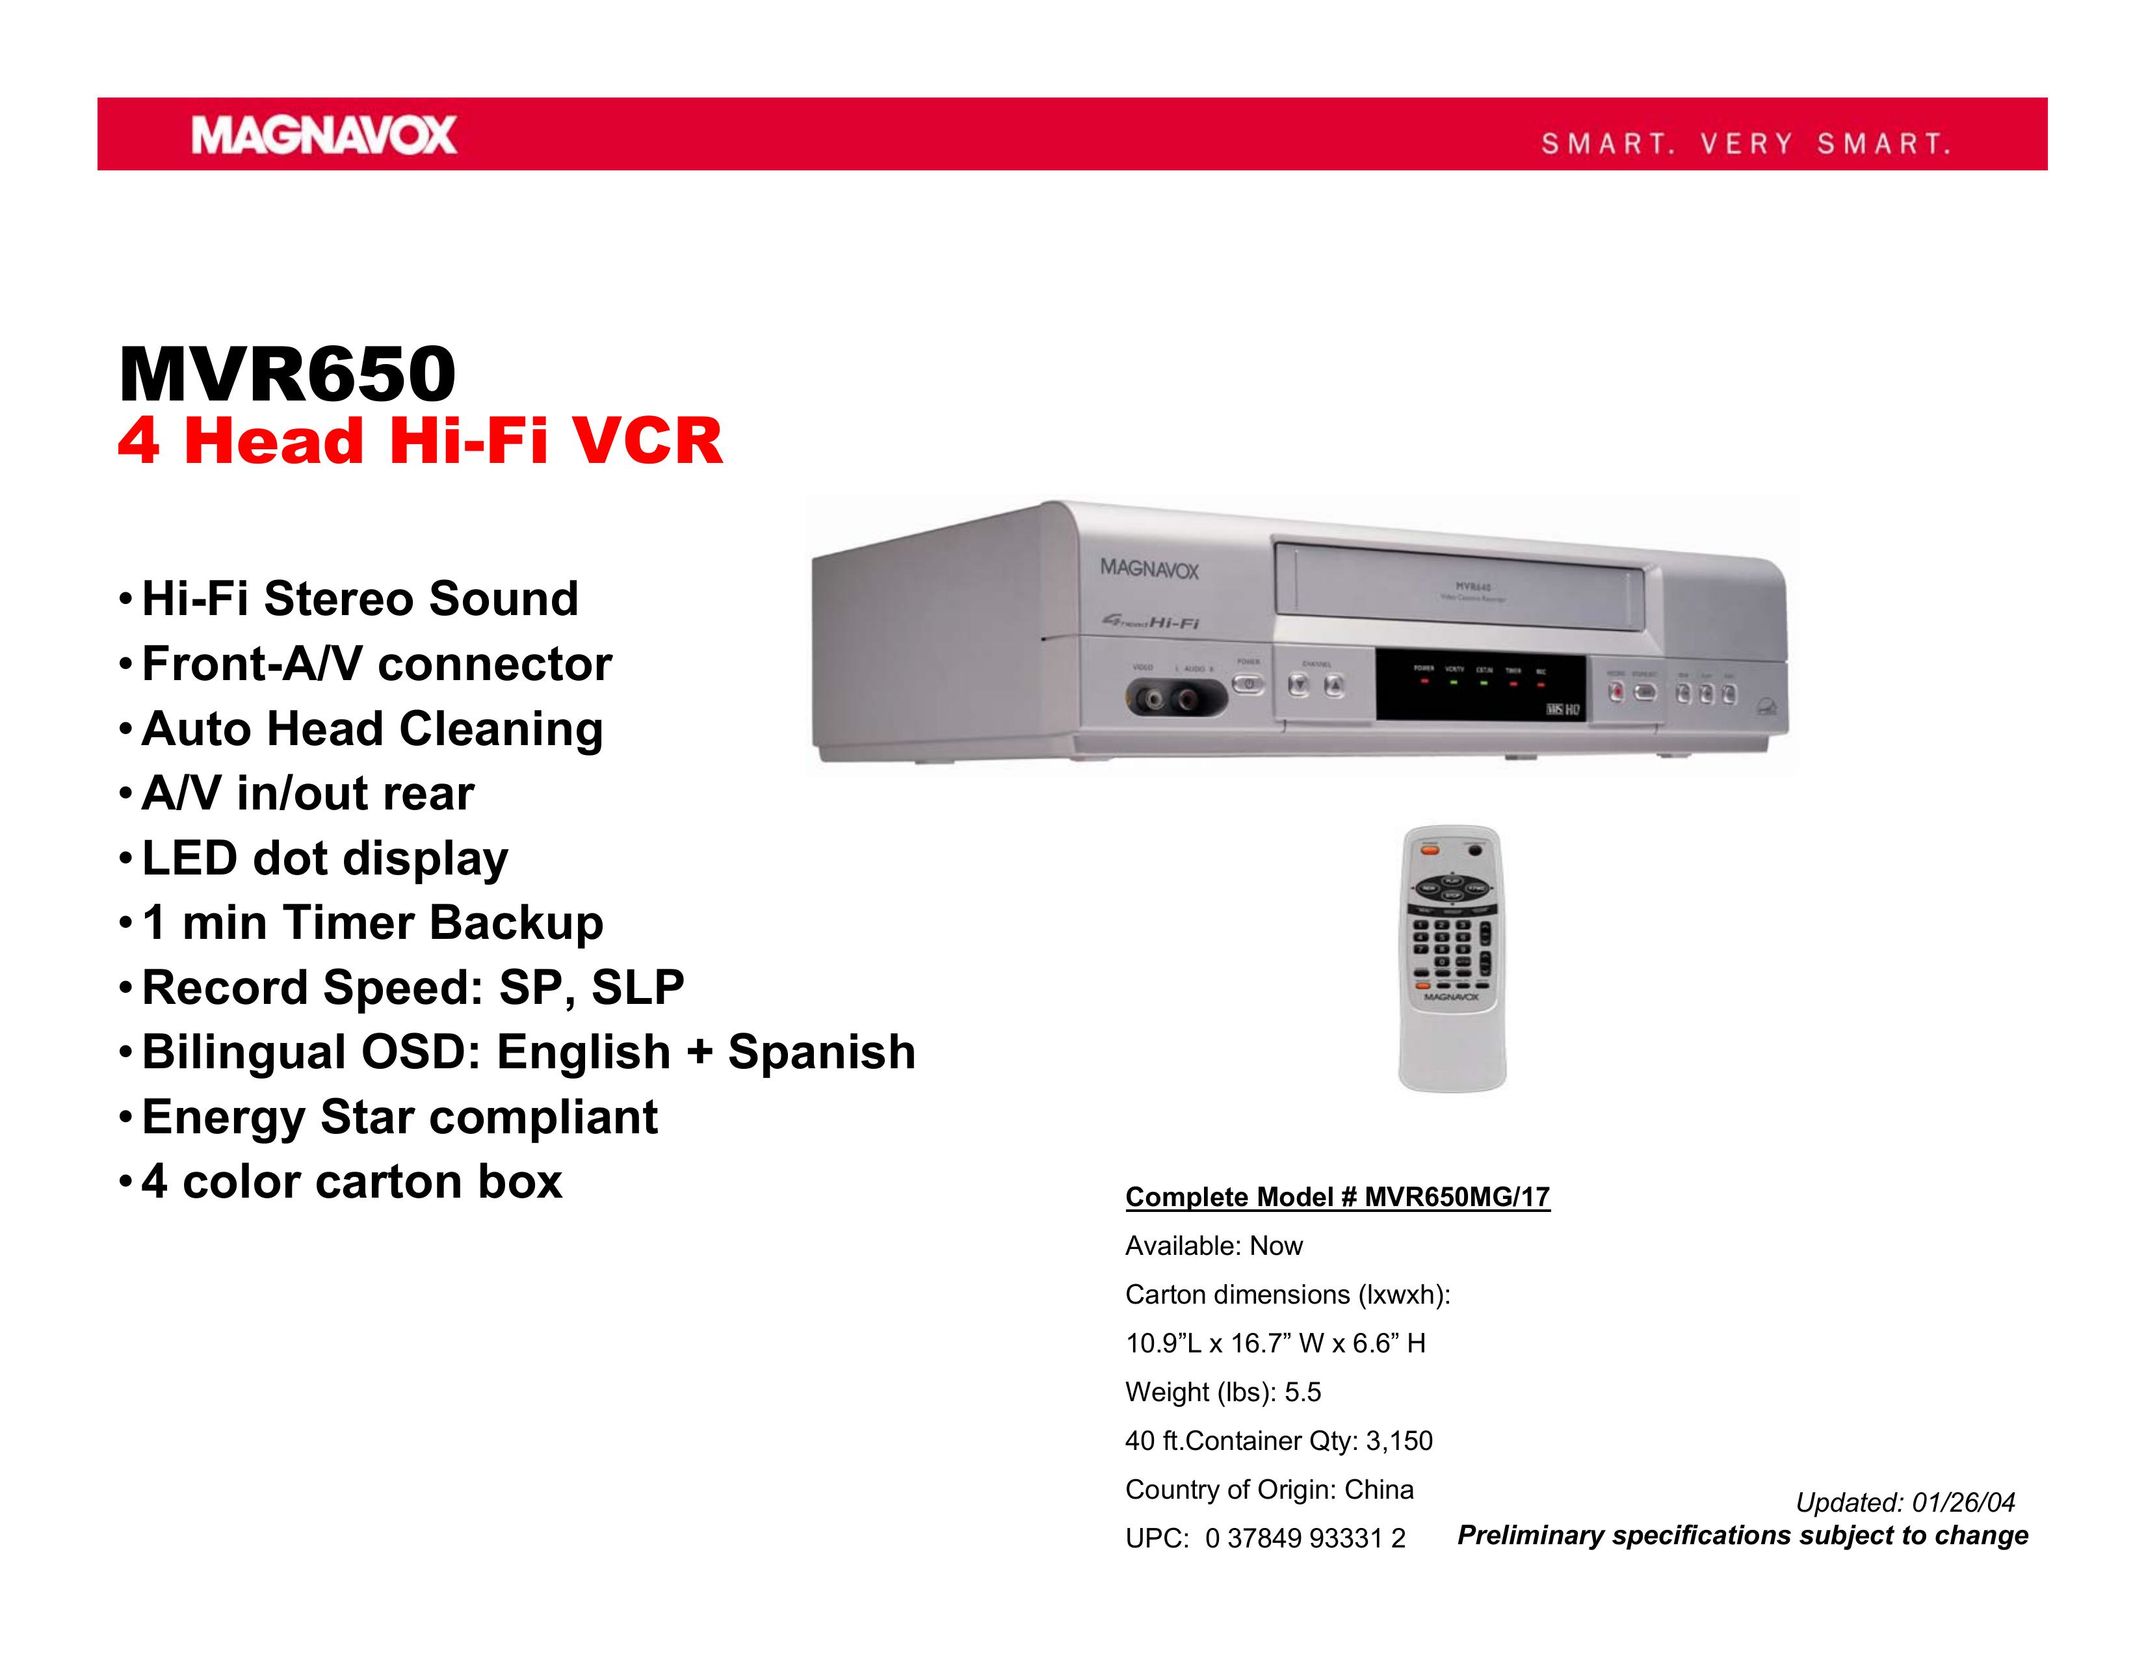 Magnavox MVR650 VCR User Manual